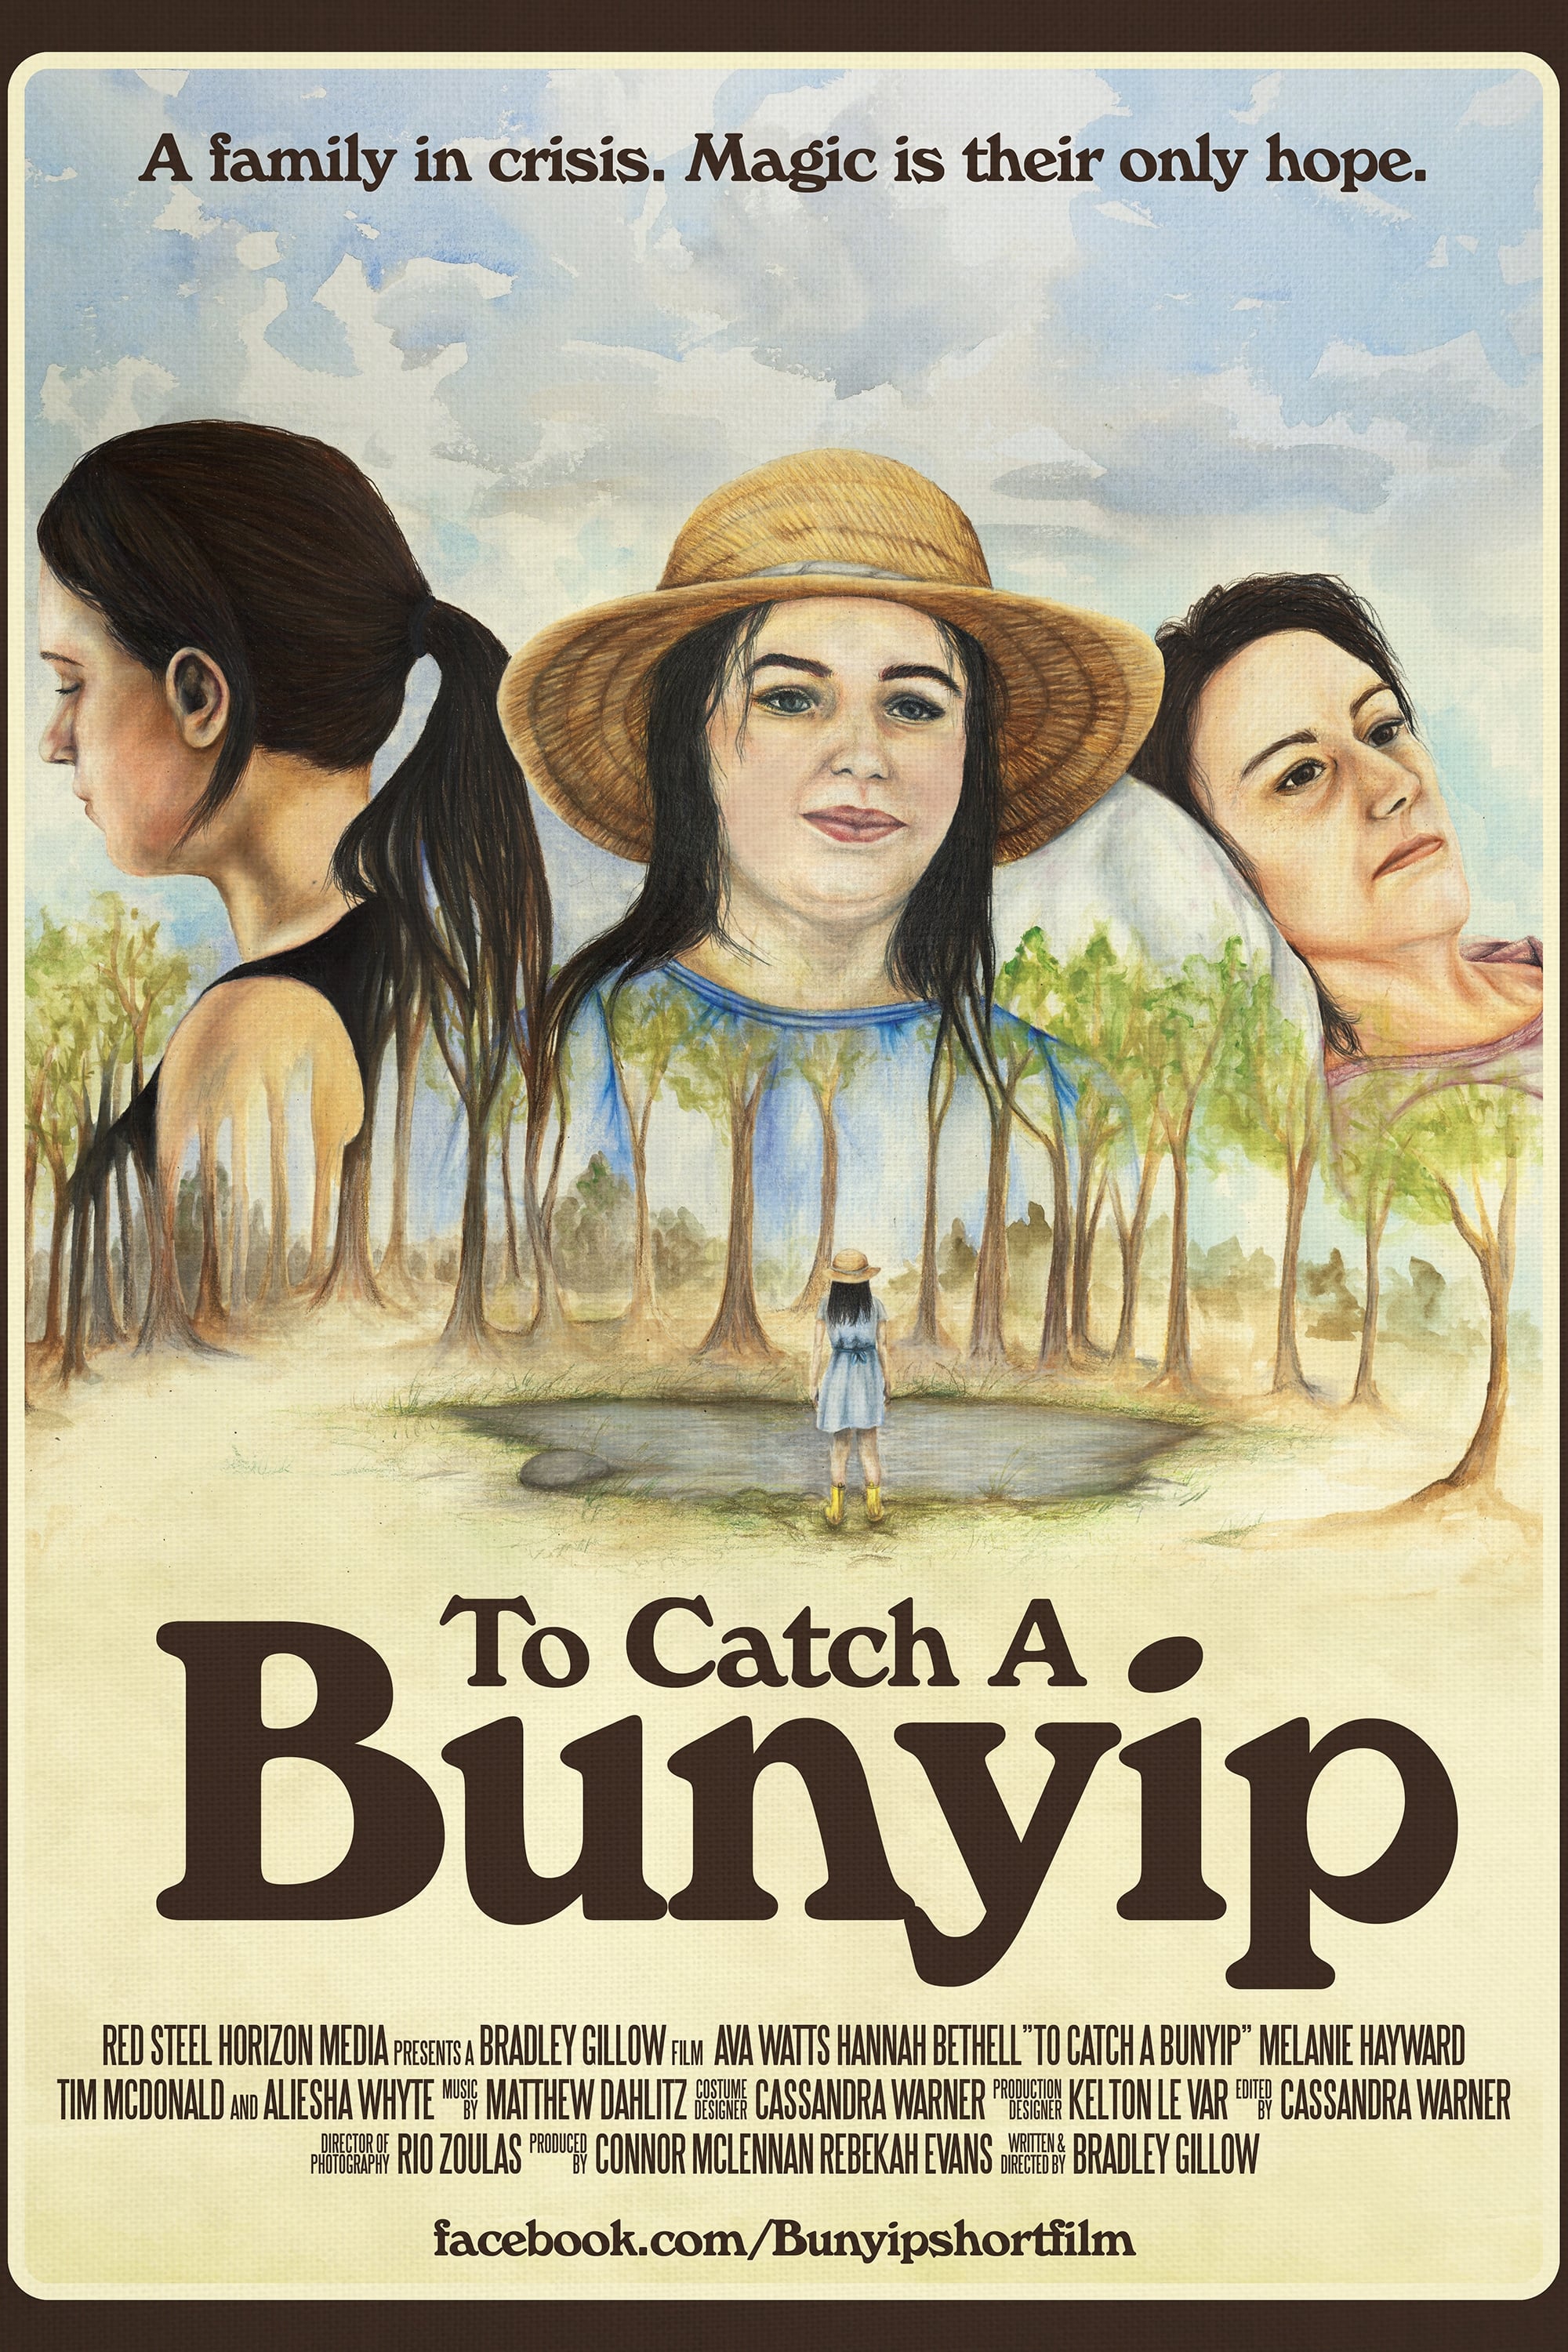 To Catch A Bunyip